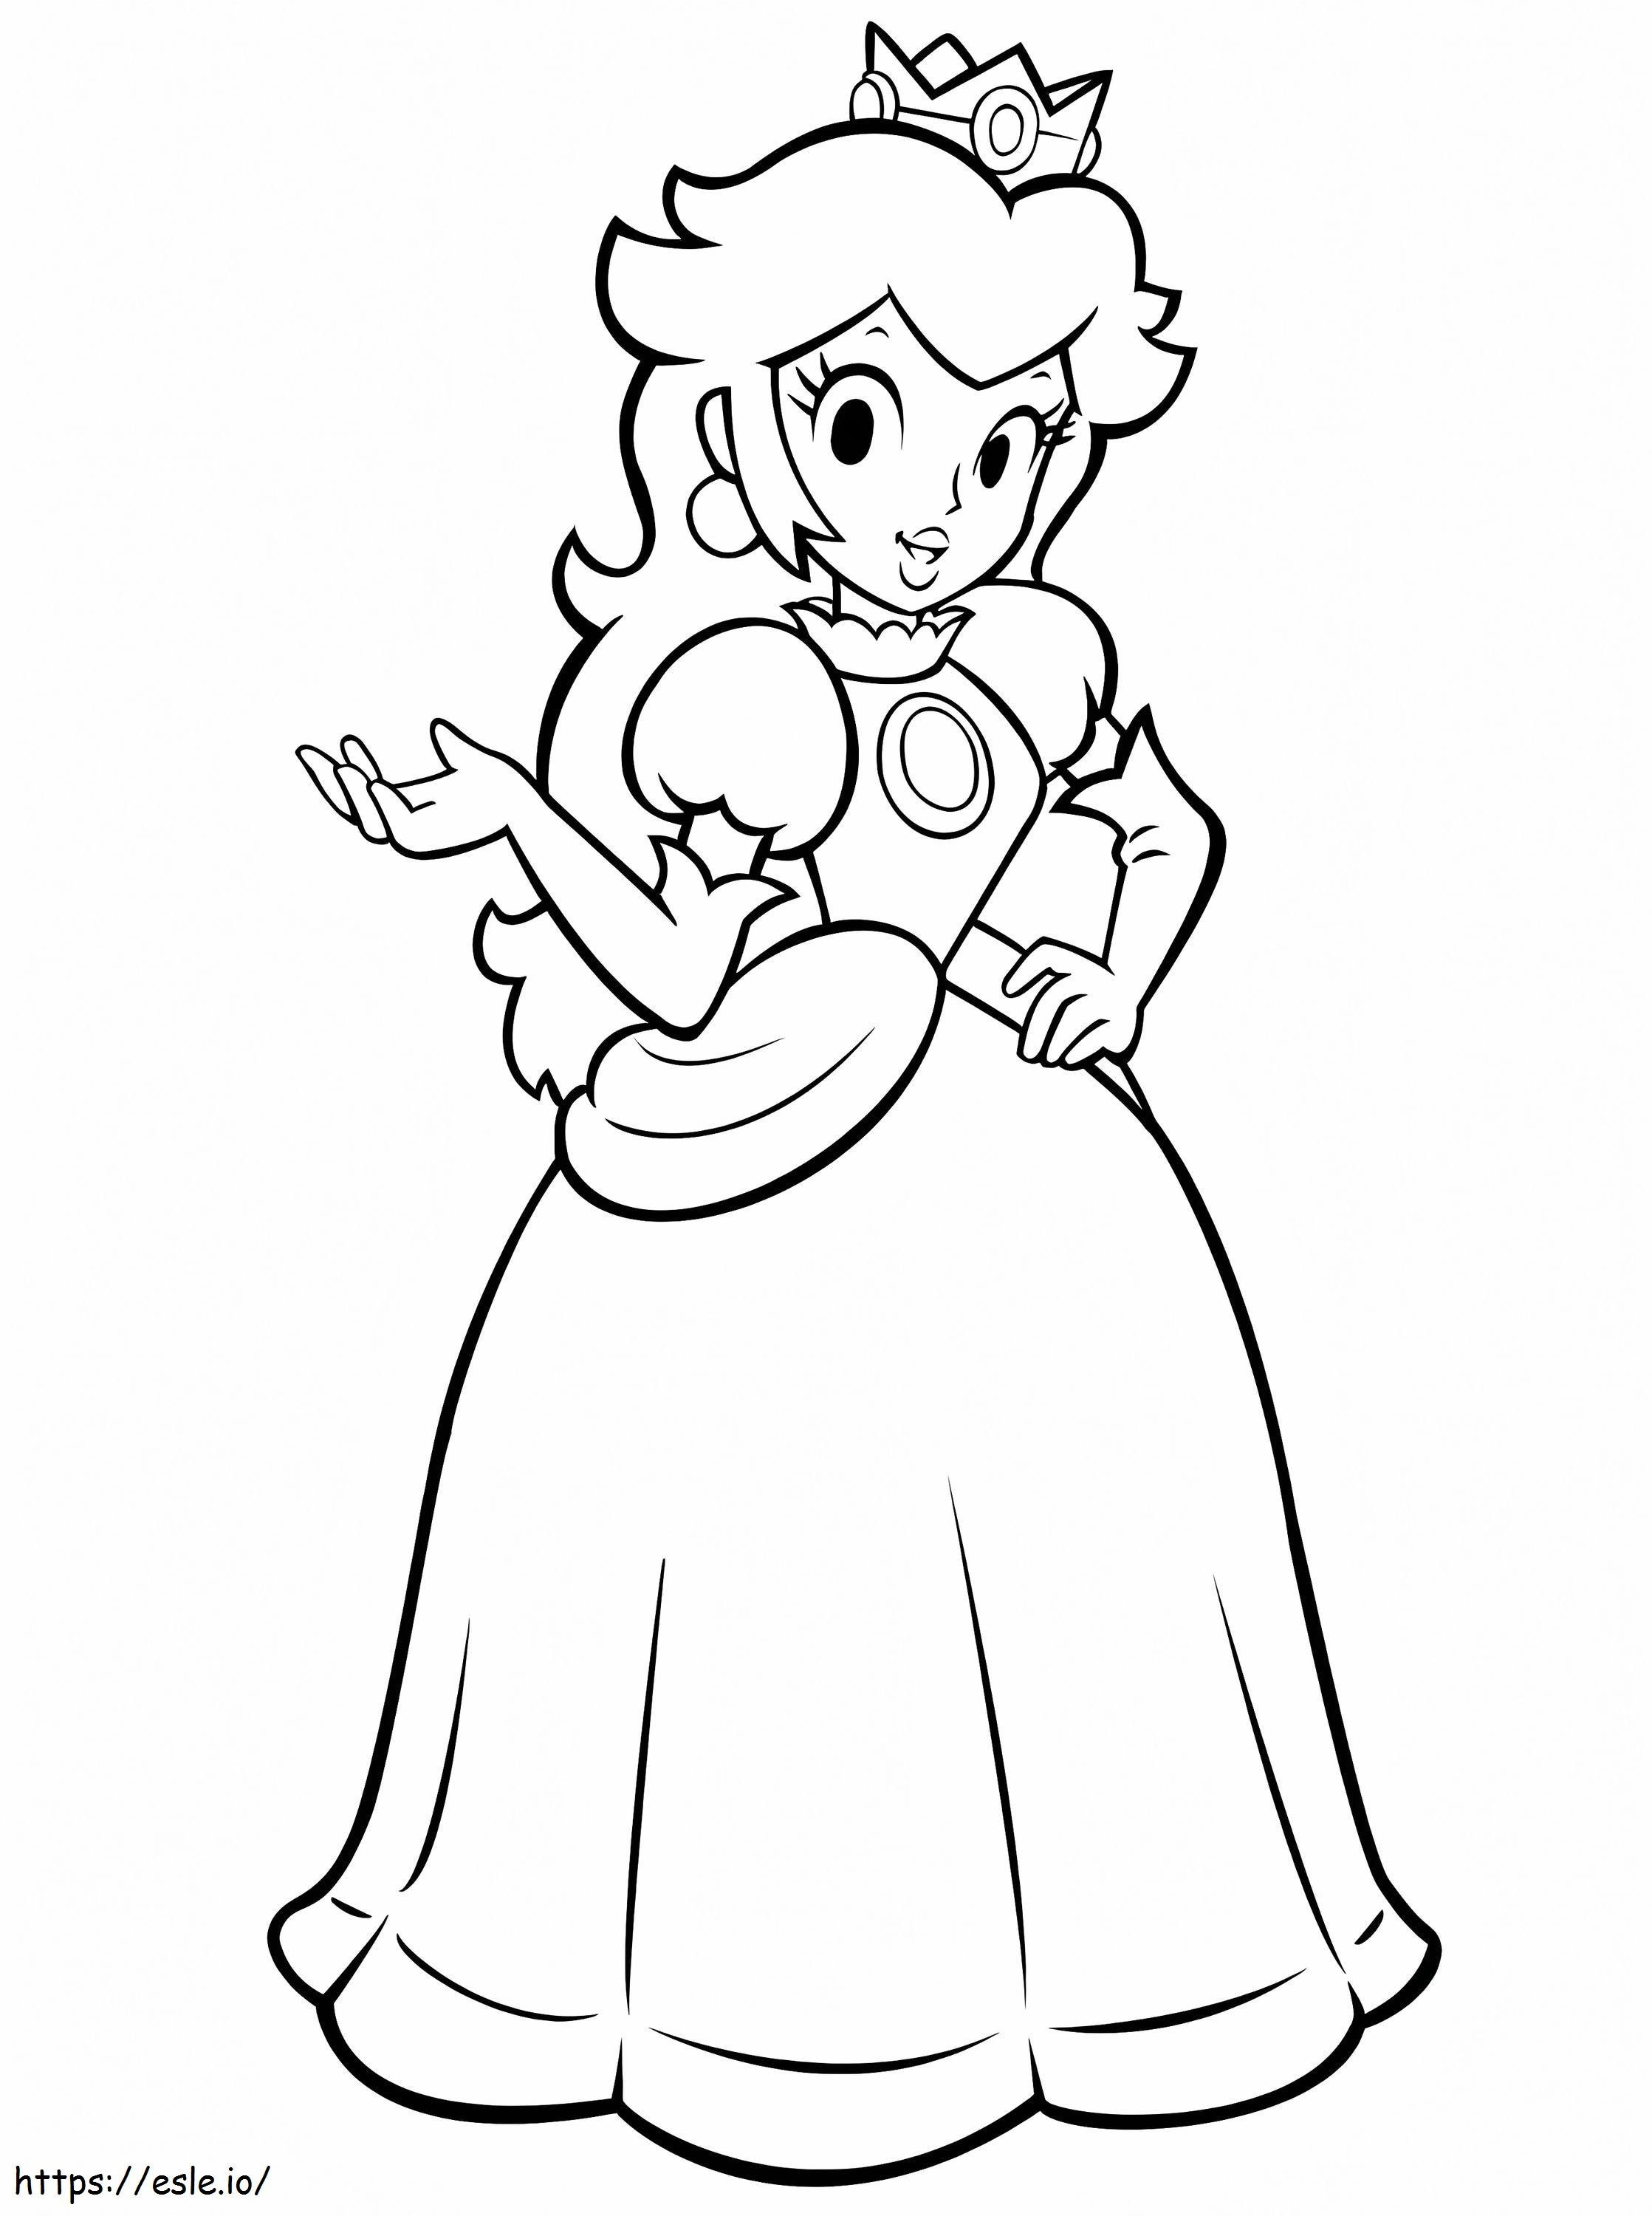 Princess Peach 1 coloring page